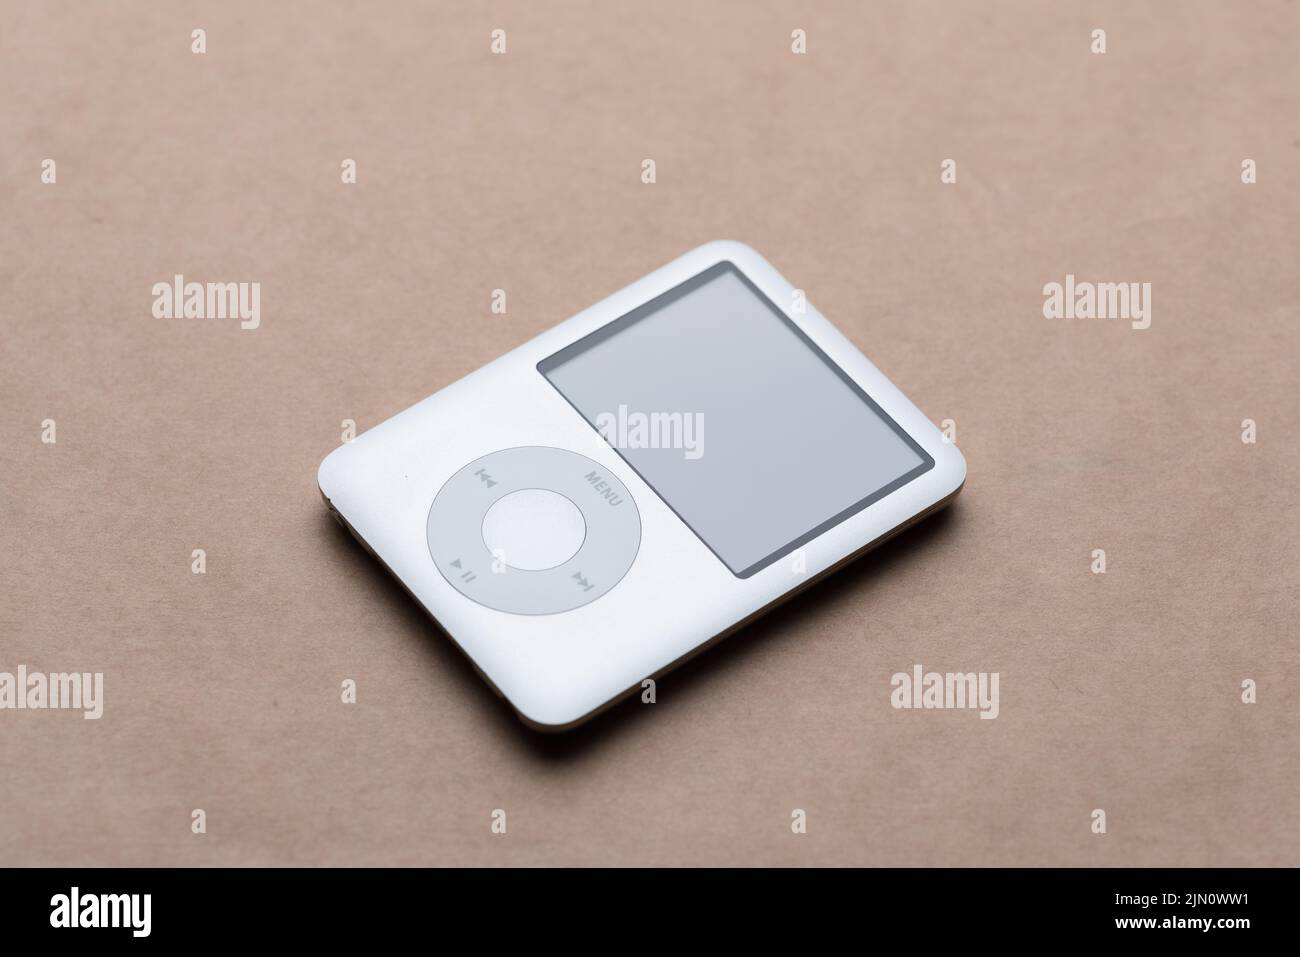 Apple ipod generation -Fotos und -Bildmaterial in hoher Auflösung – Alamy